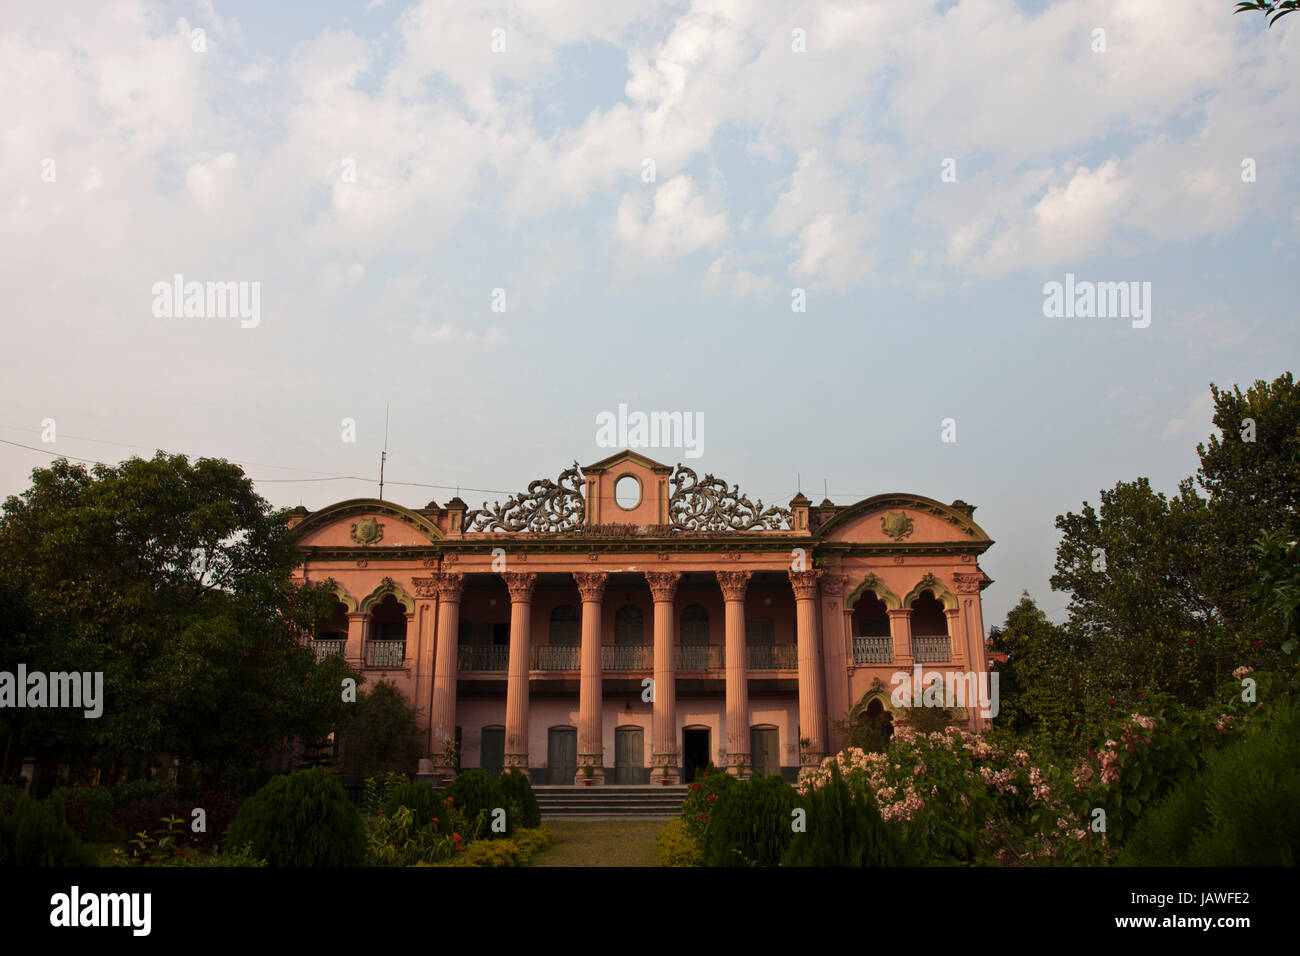 Chowdhury Lodge of Mohera Zamider's Palace, at Mirzapur, in Tangail, Bangladesh. Stock Photo